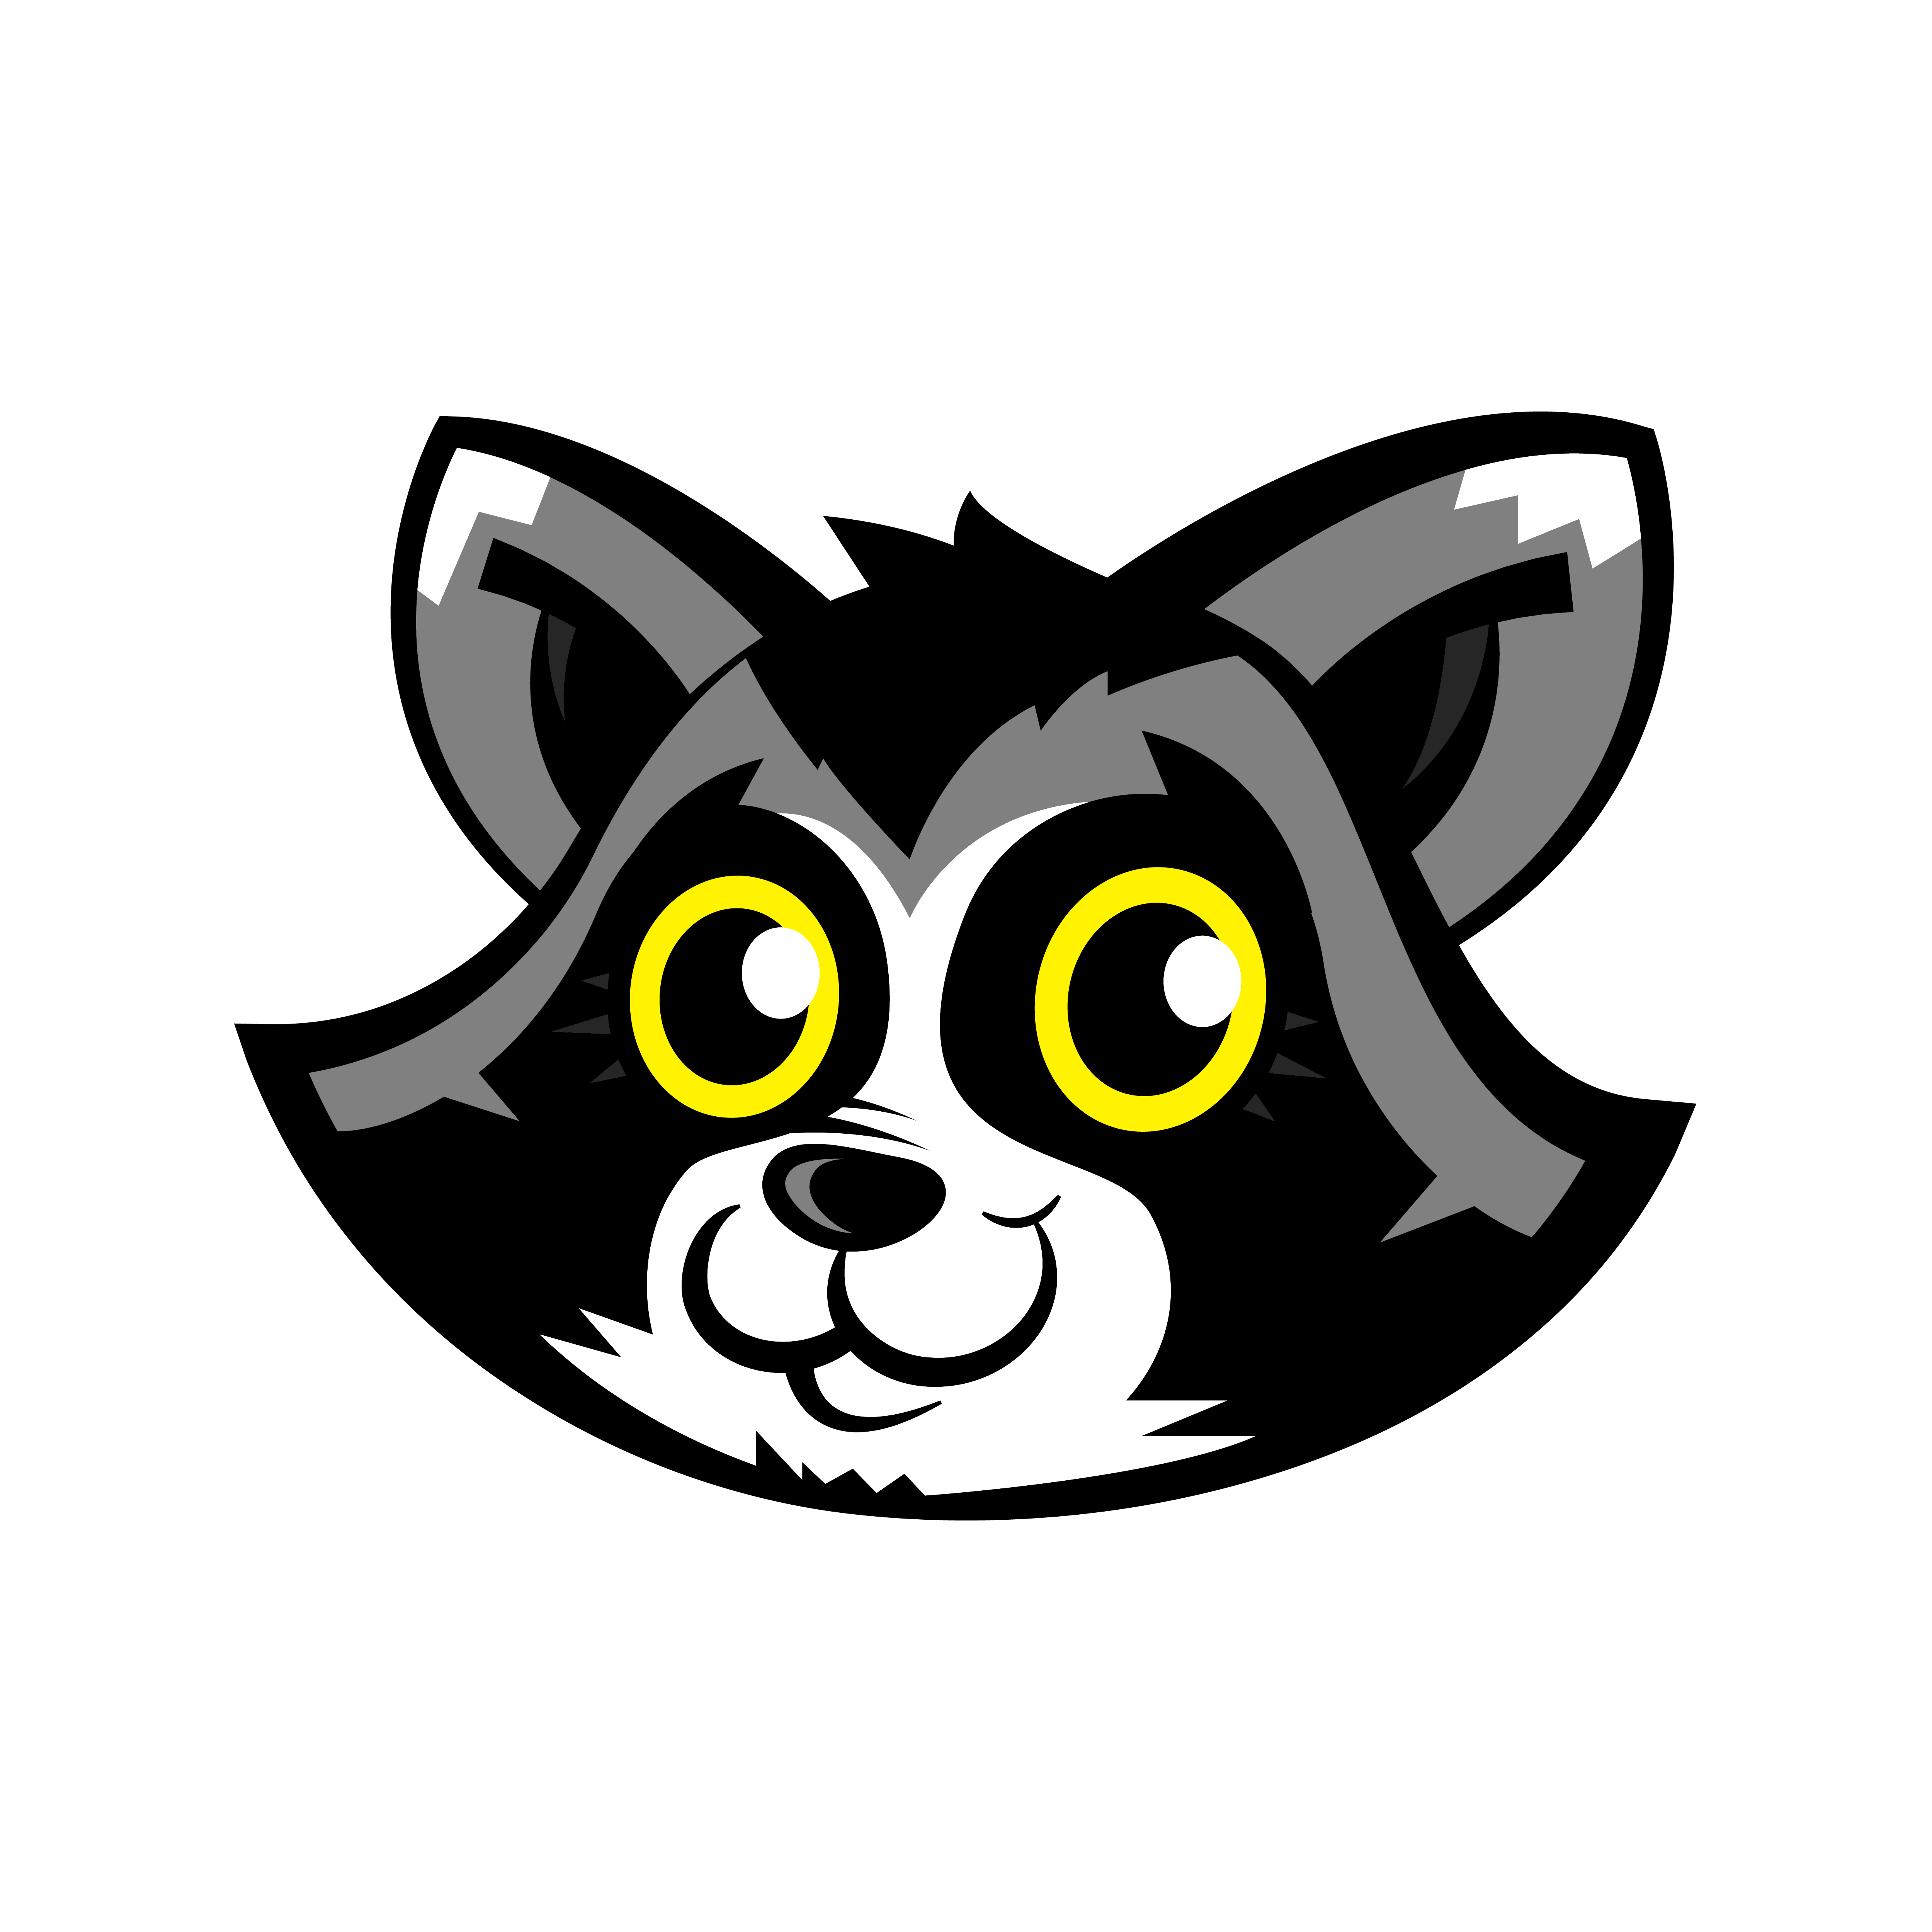 Download Raccoon Animal Face Vector 546744 - Download Free Vectors, Clipart Graphics & Vector Art